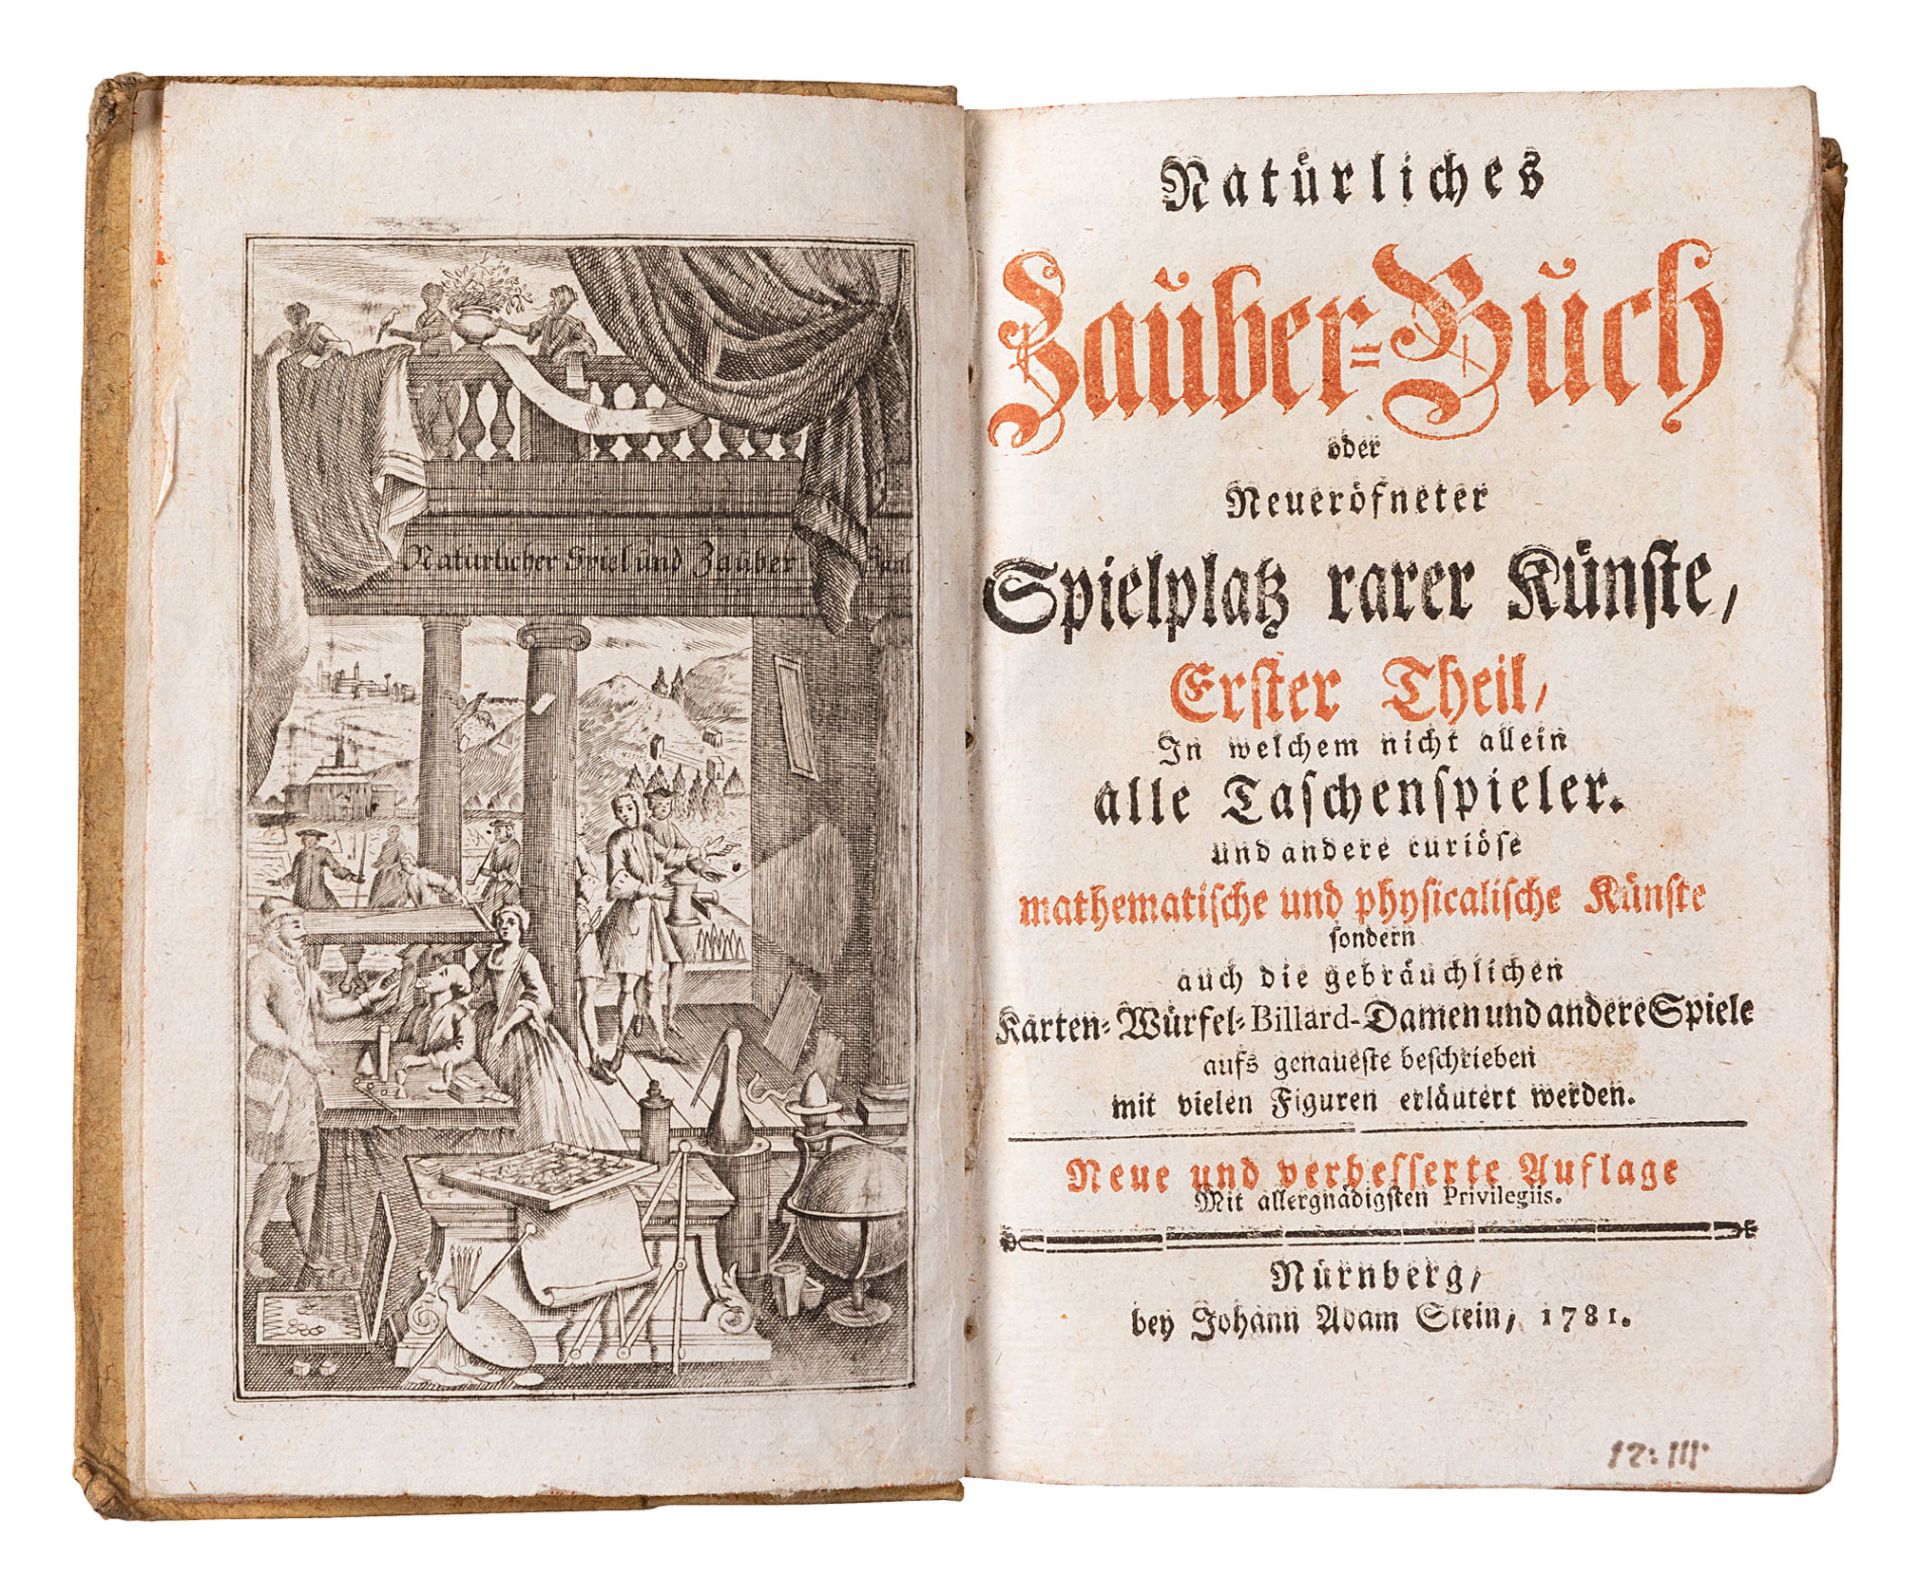 Natuerliches Zauber-Buch - Image 2 of 3